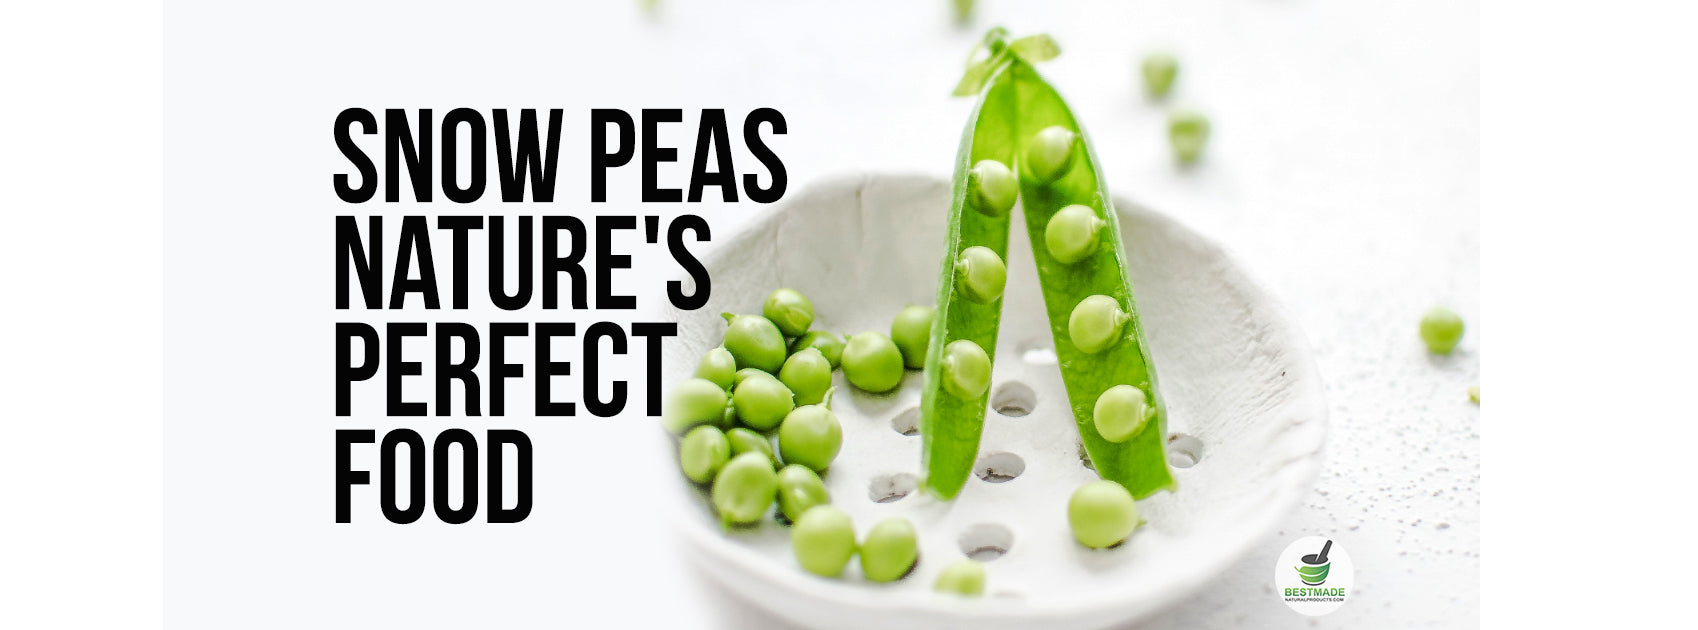 Nature's Perfect Food: Snow Peas